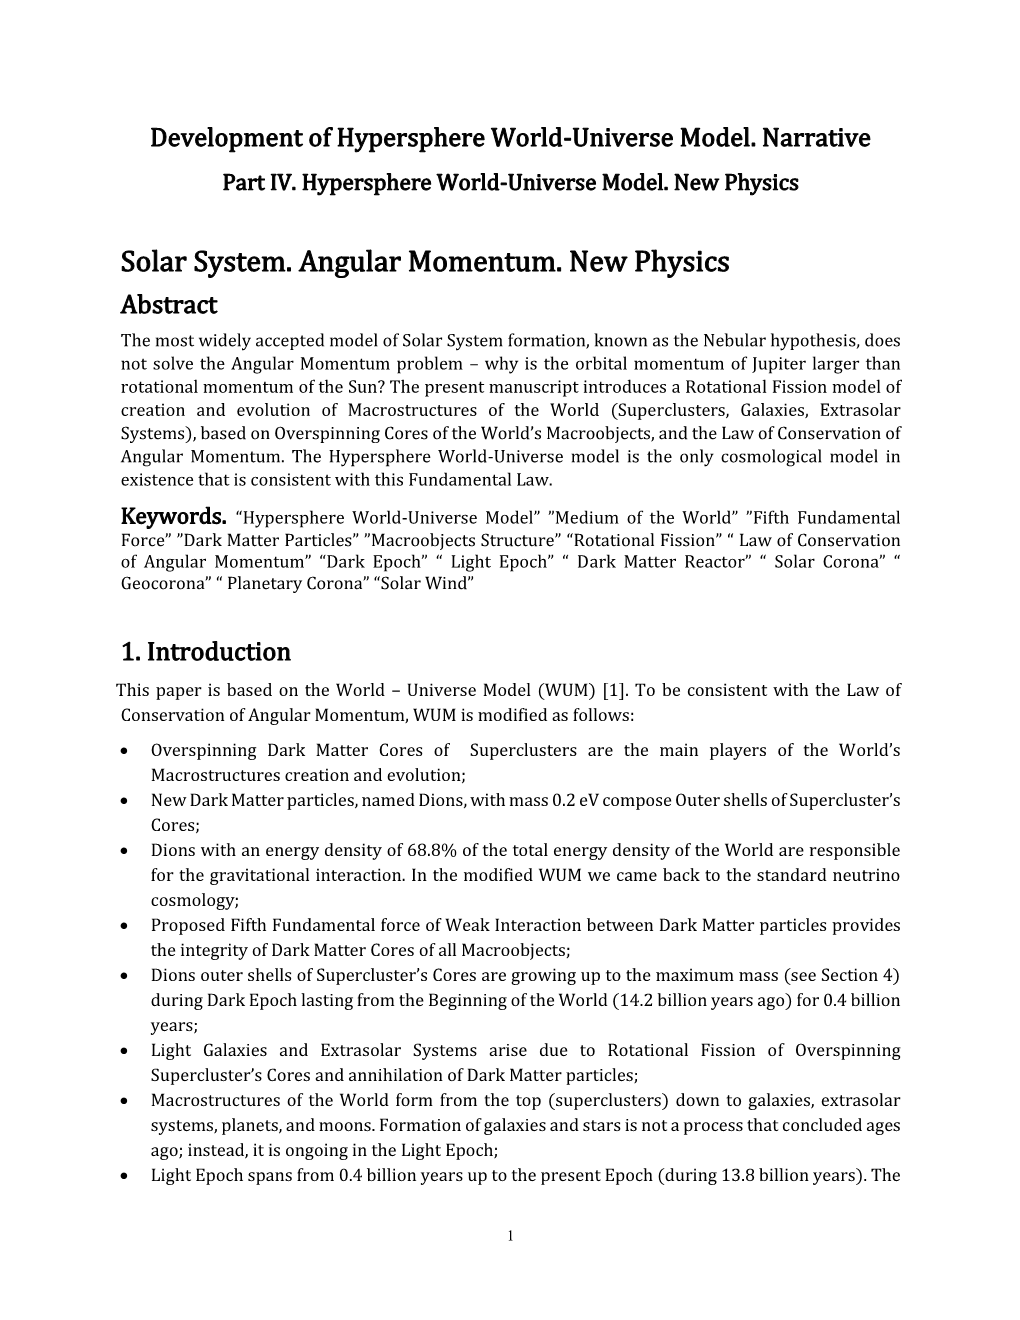 Solar System. Angular Momentum. New Physics